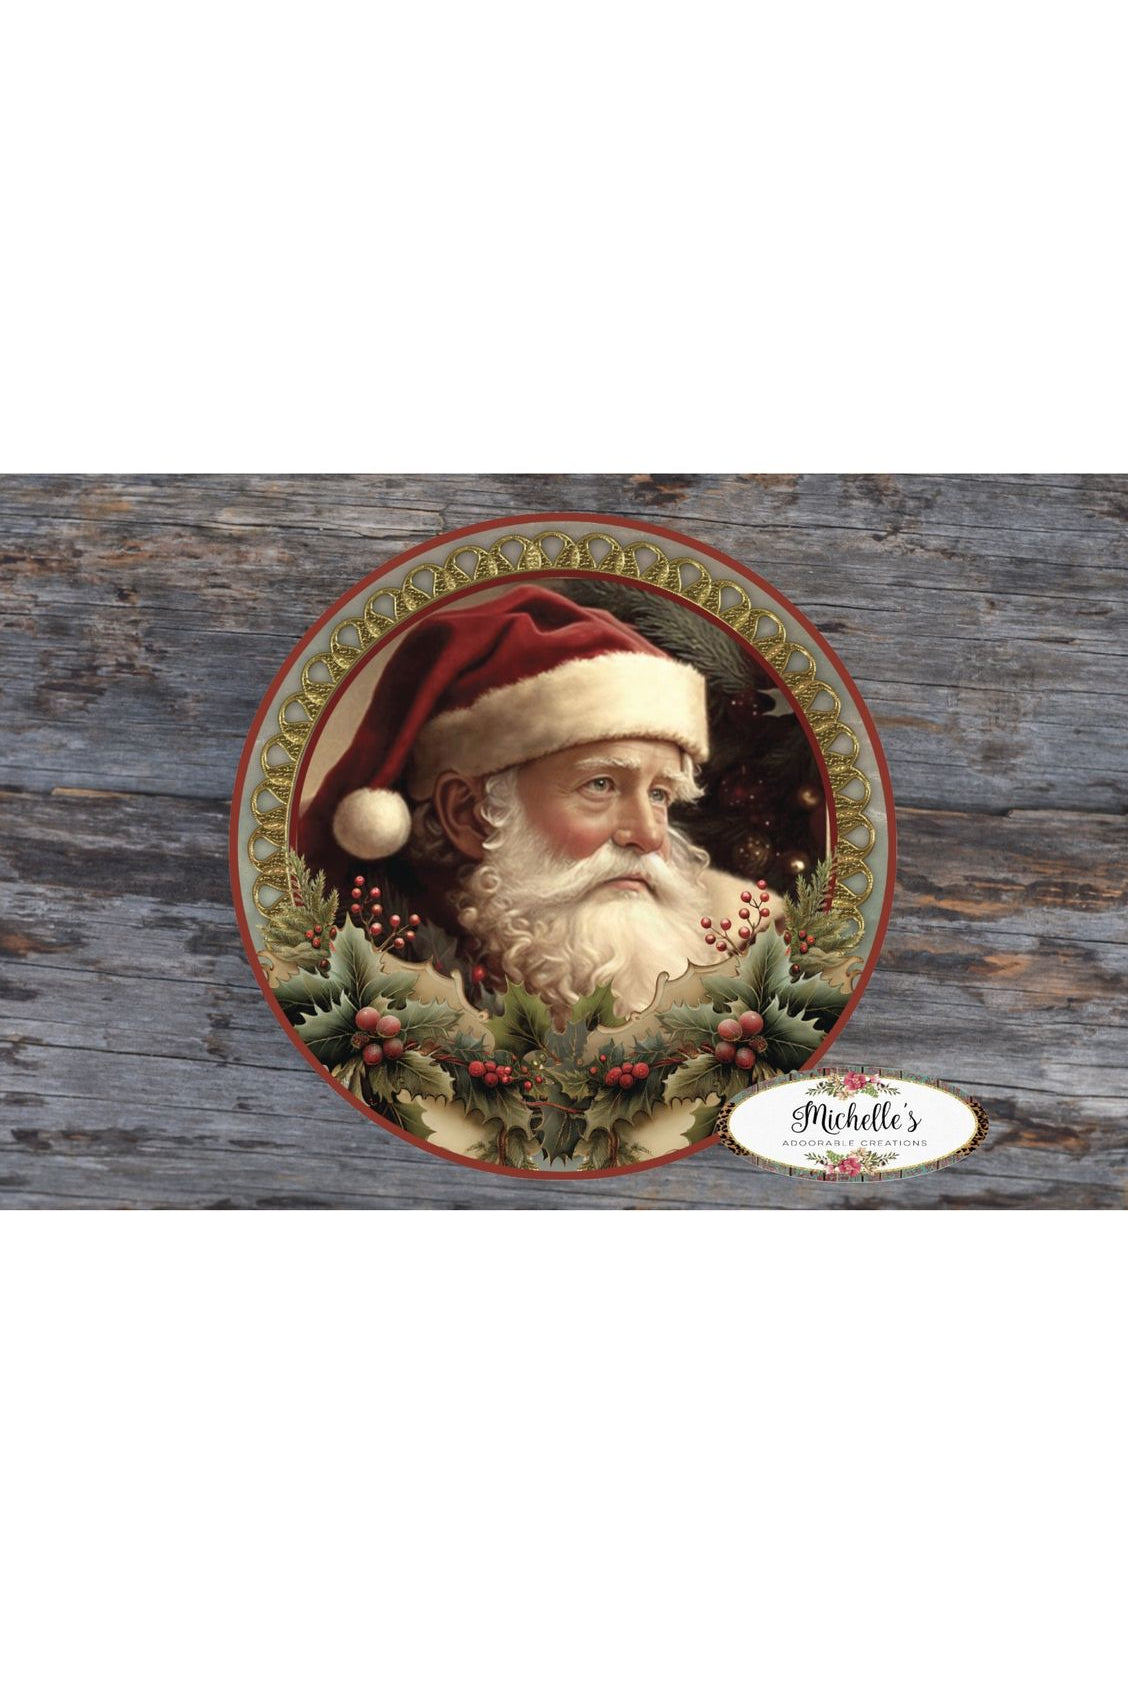 Shop For Vintage Victoria Santa Holly Sign - Wreath Enhancement